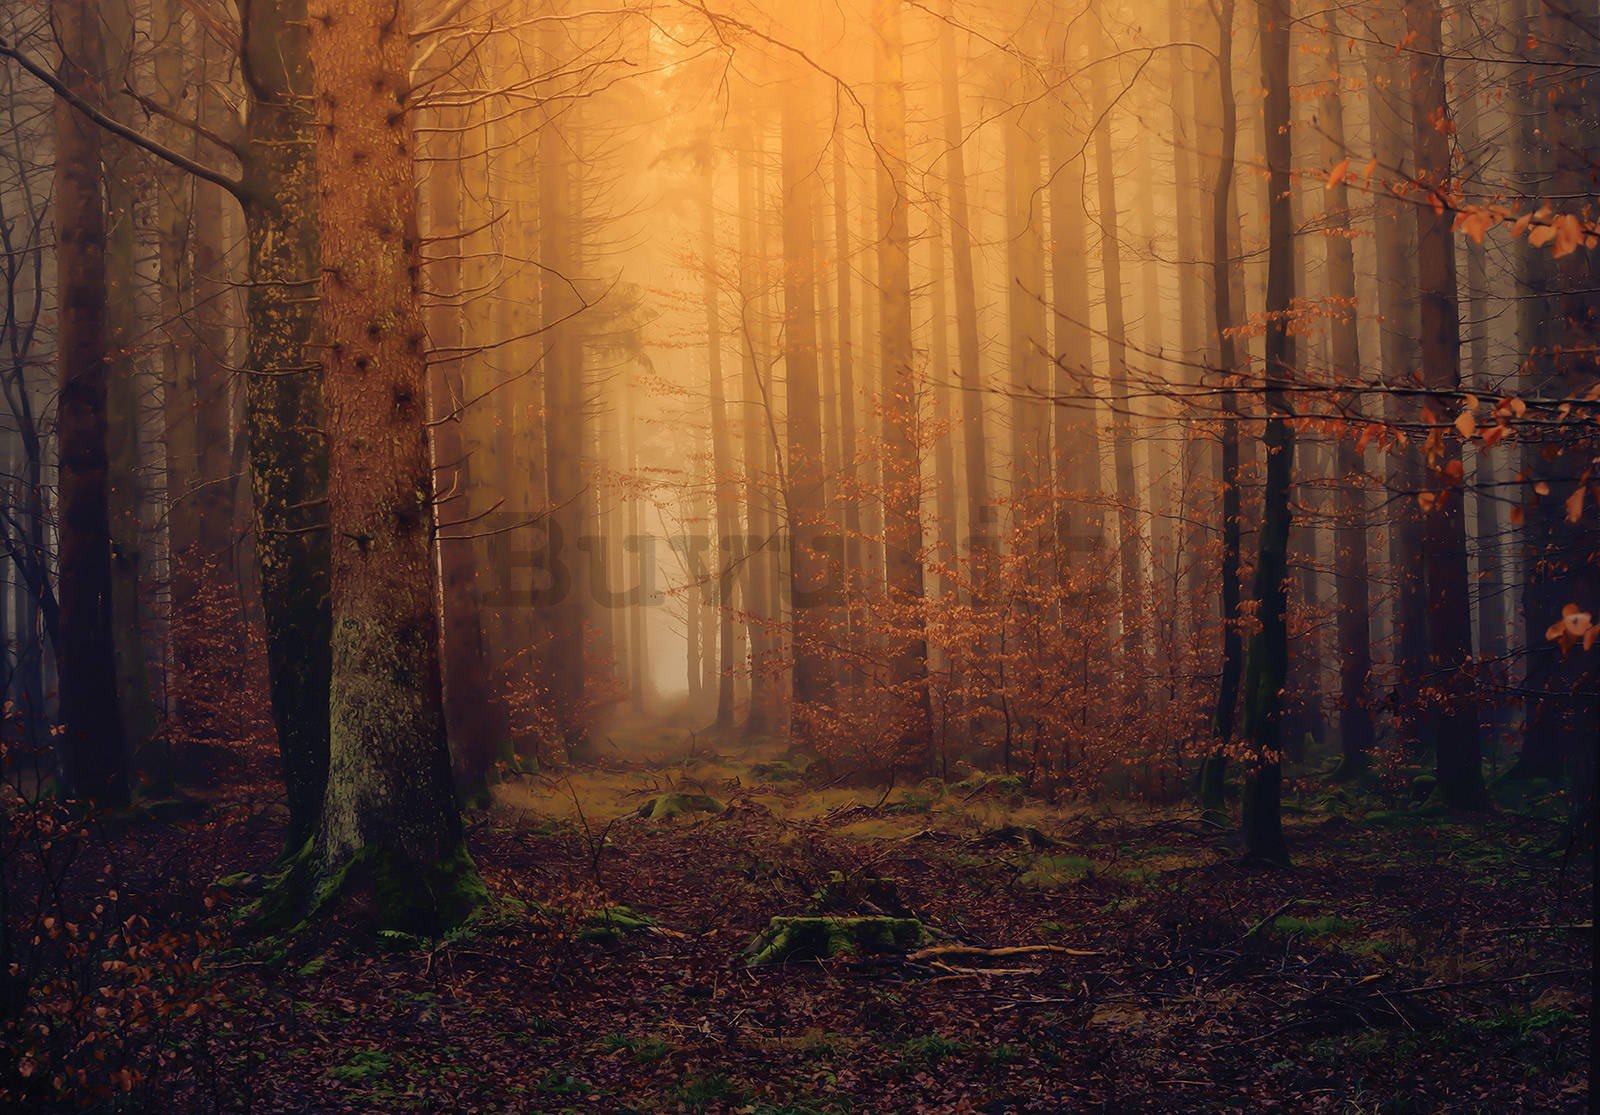 Fotomurale in TNT: Foresta nebbiosa in autunno - 104x70,5 cm